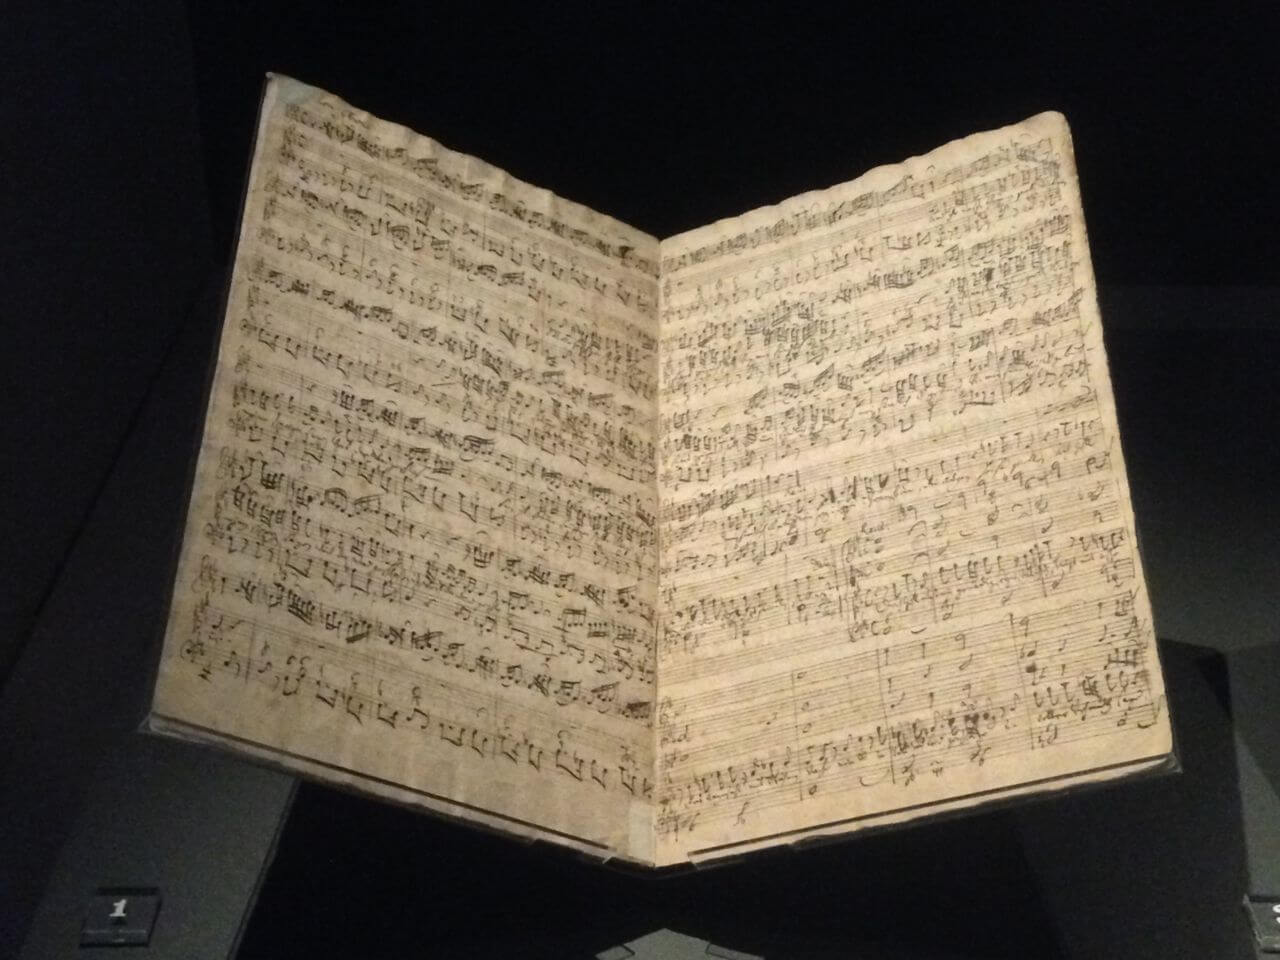 Bach's original manuscript at the Royal Danish Library